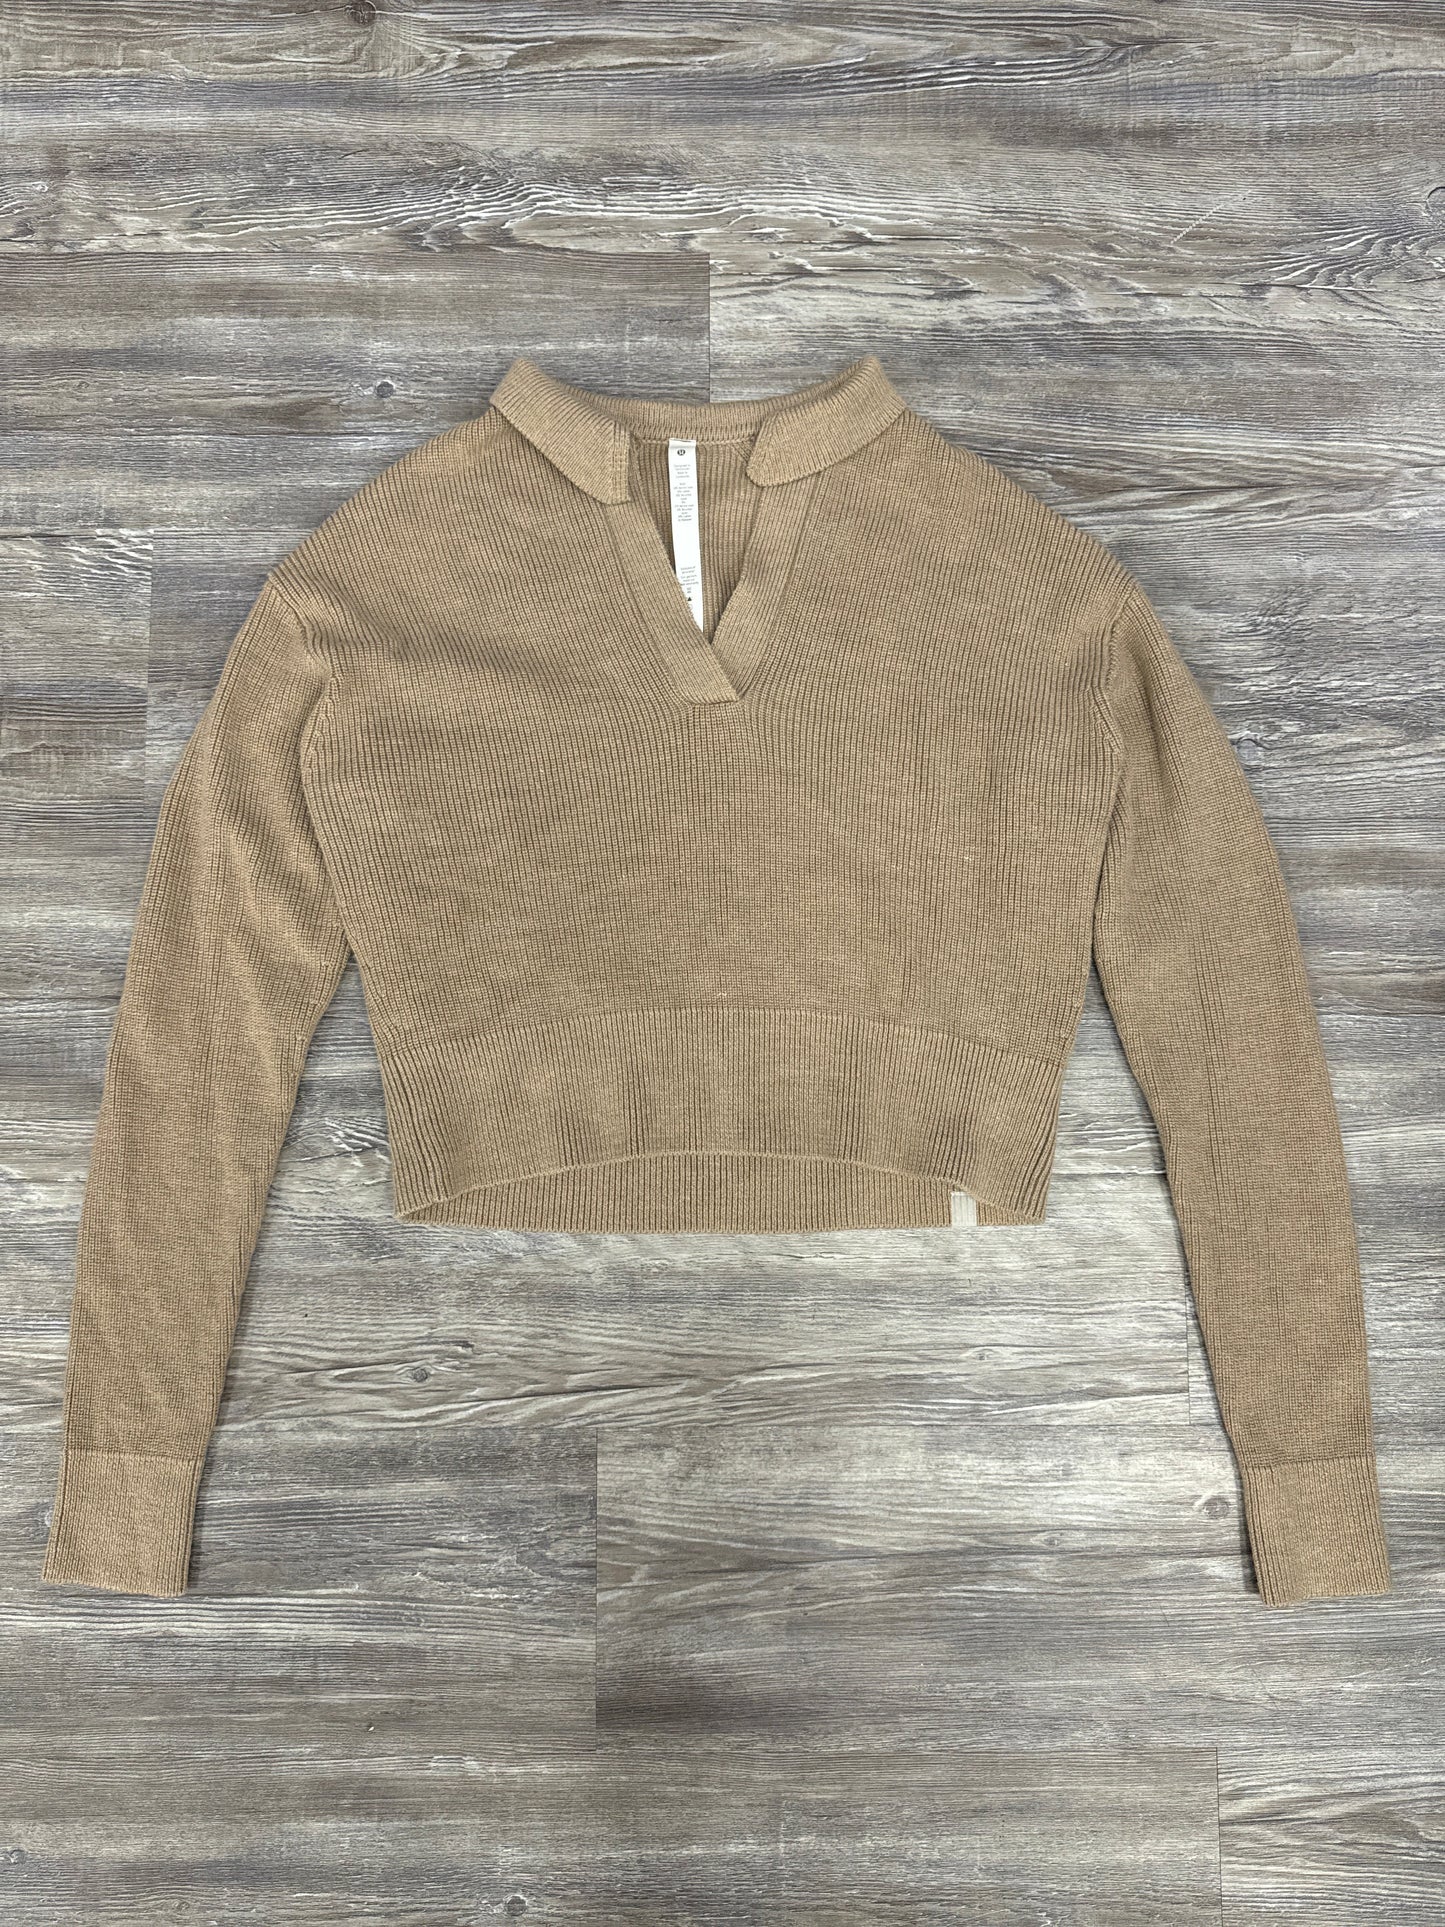 Tan Sweater Lululemon, Size S